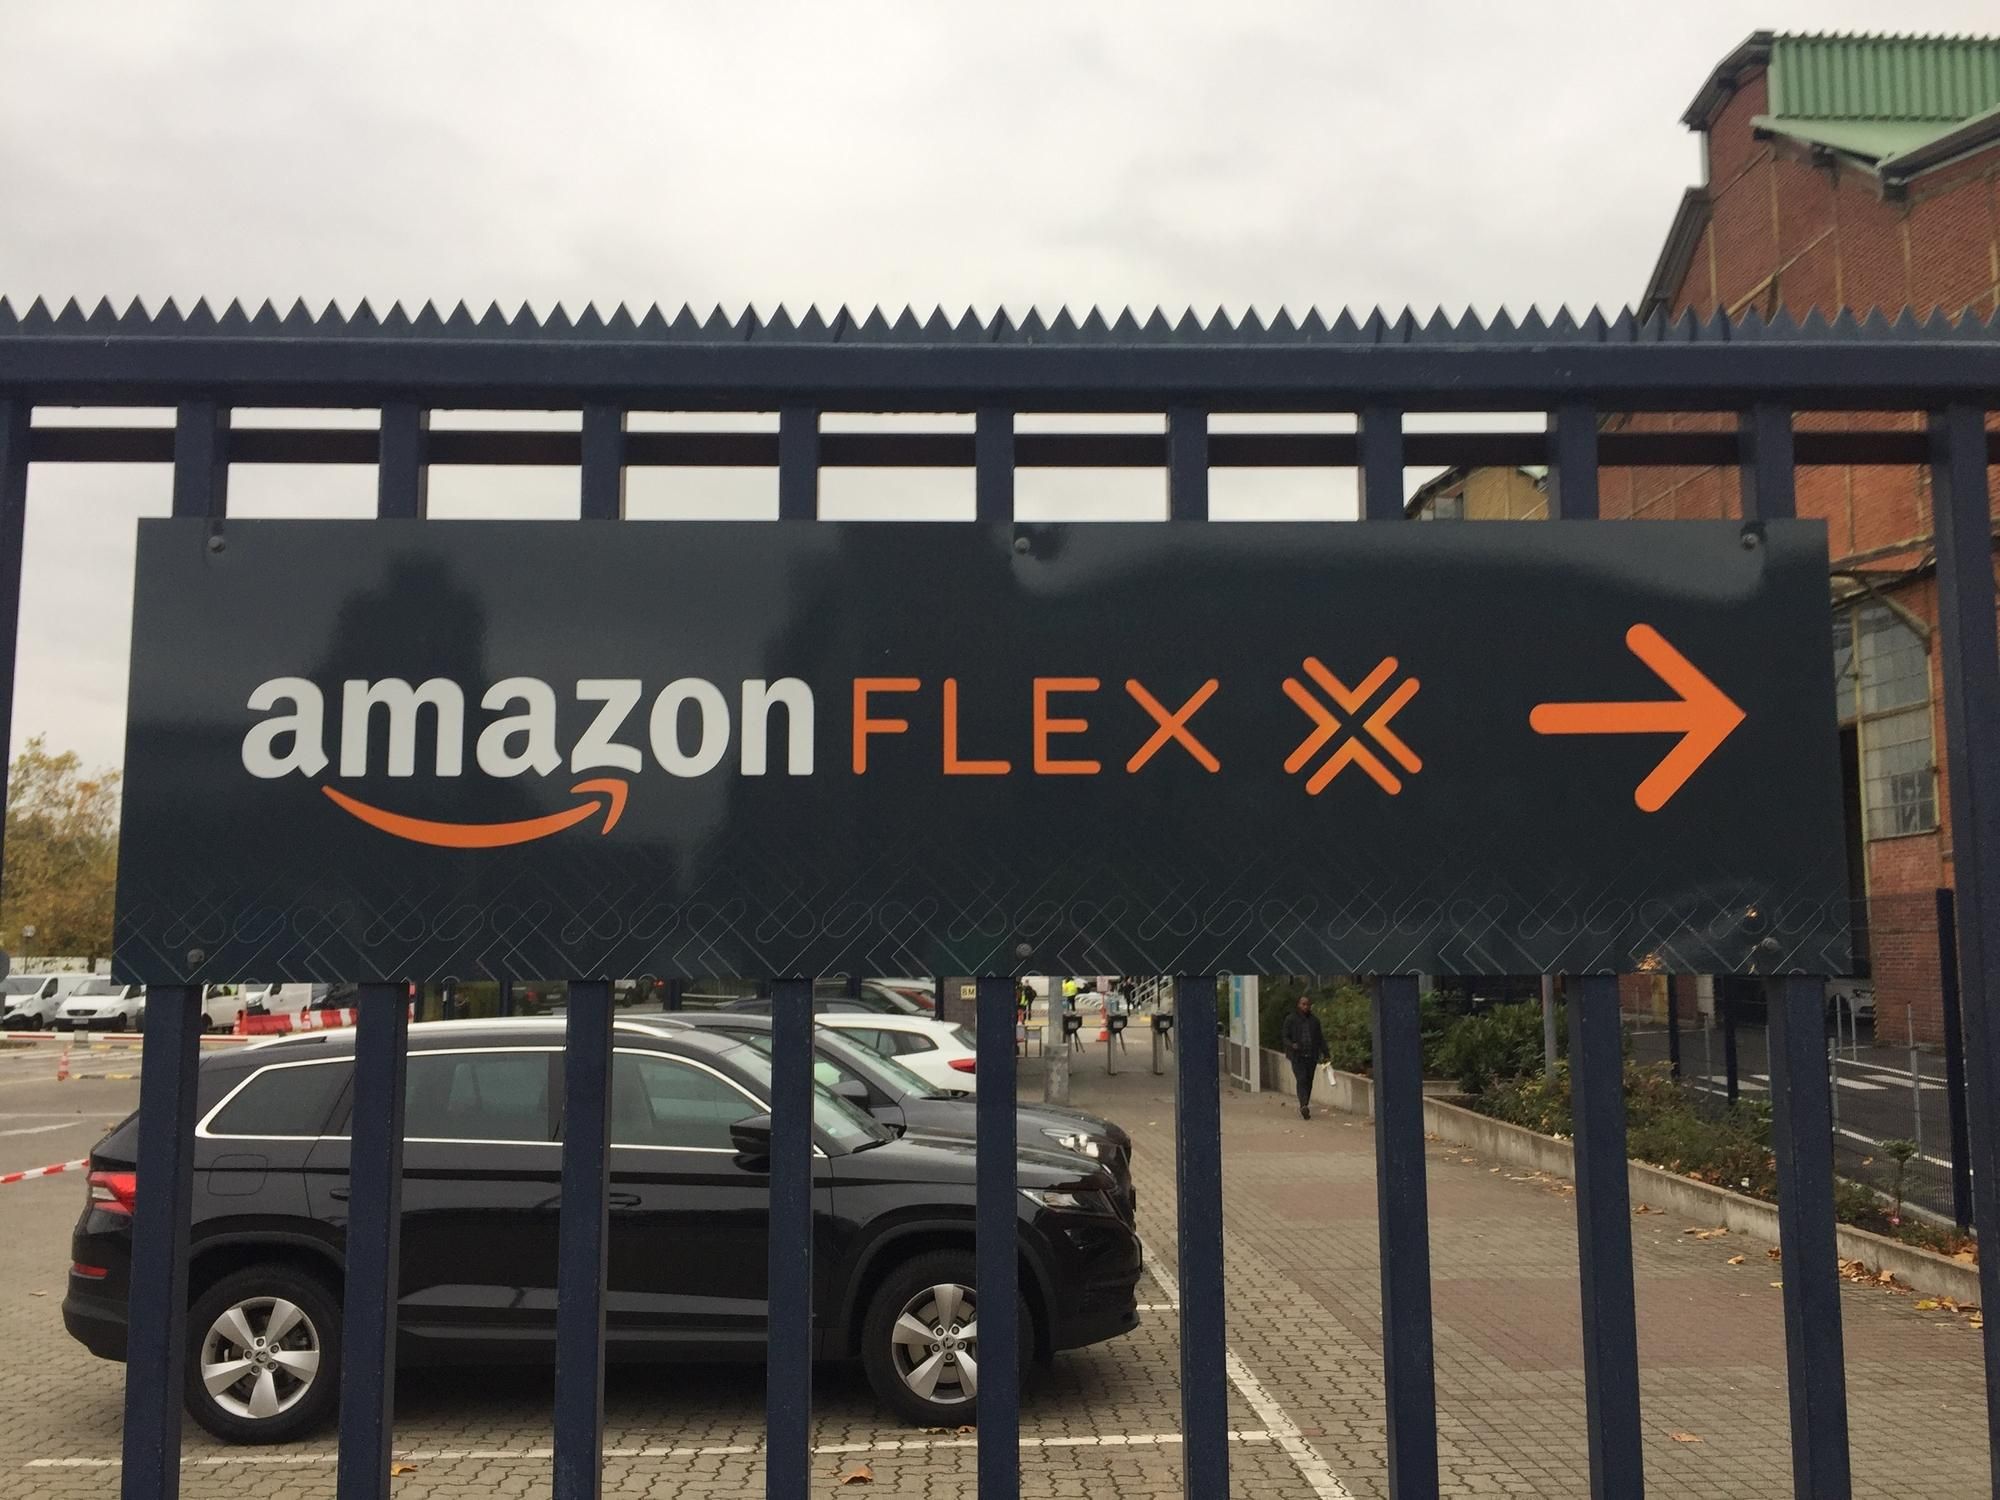 Amazon flex sign regarding the class action lawsuit filed 